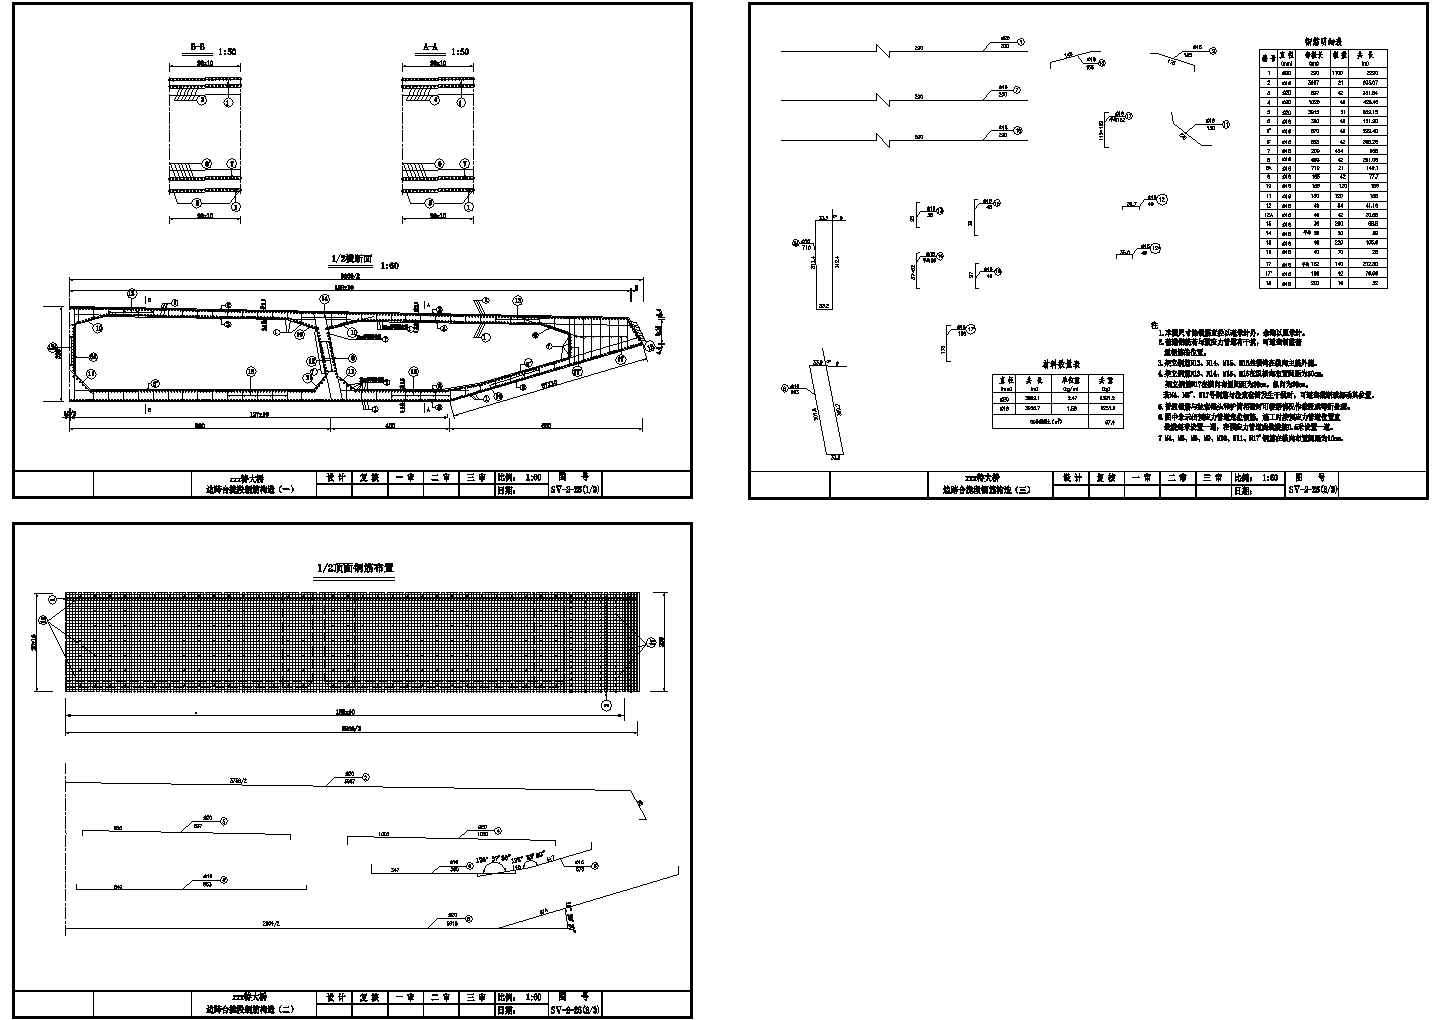 674m全漂浮体系斜拉桥主桥边跨合拢段钢筋构造节点详图设计